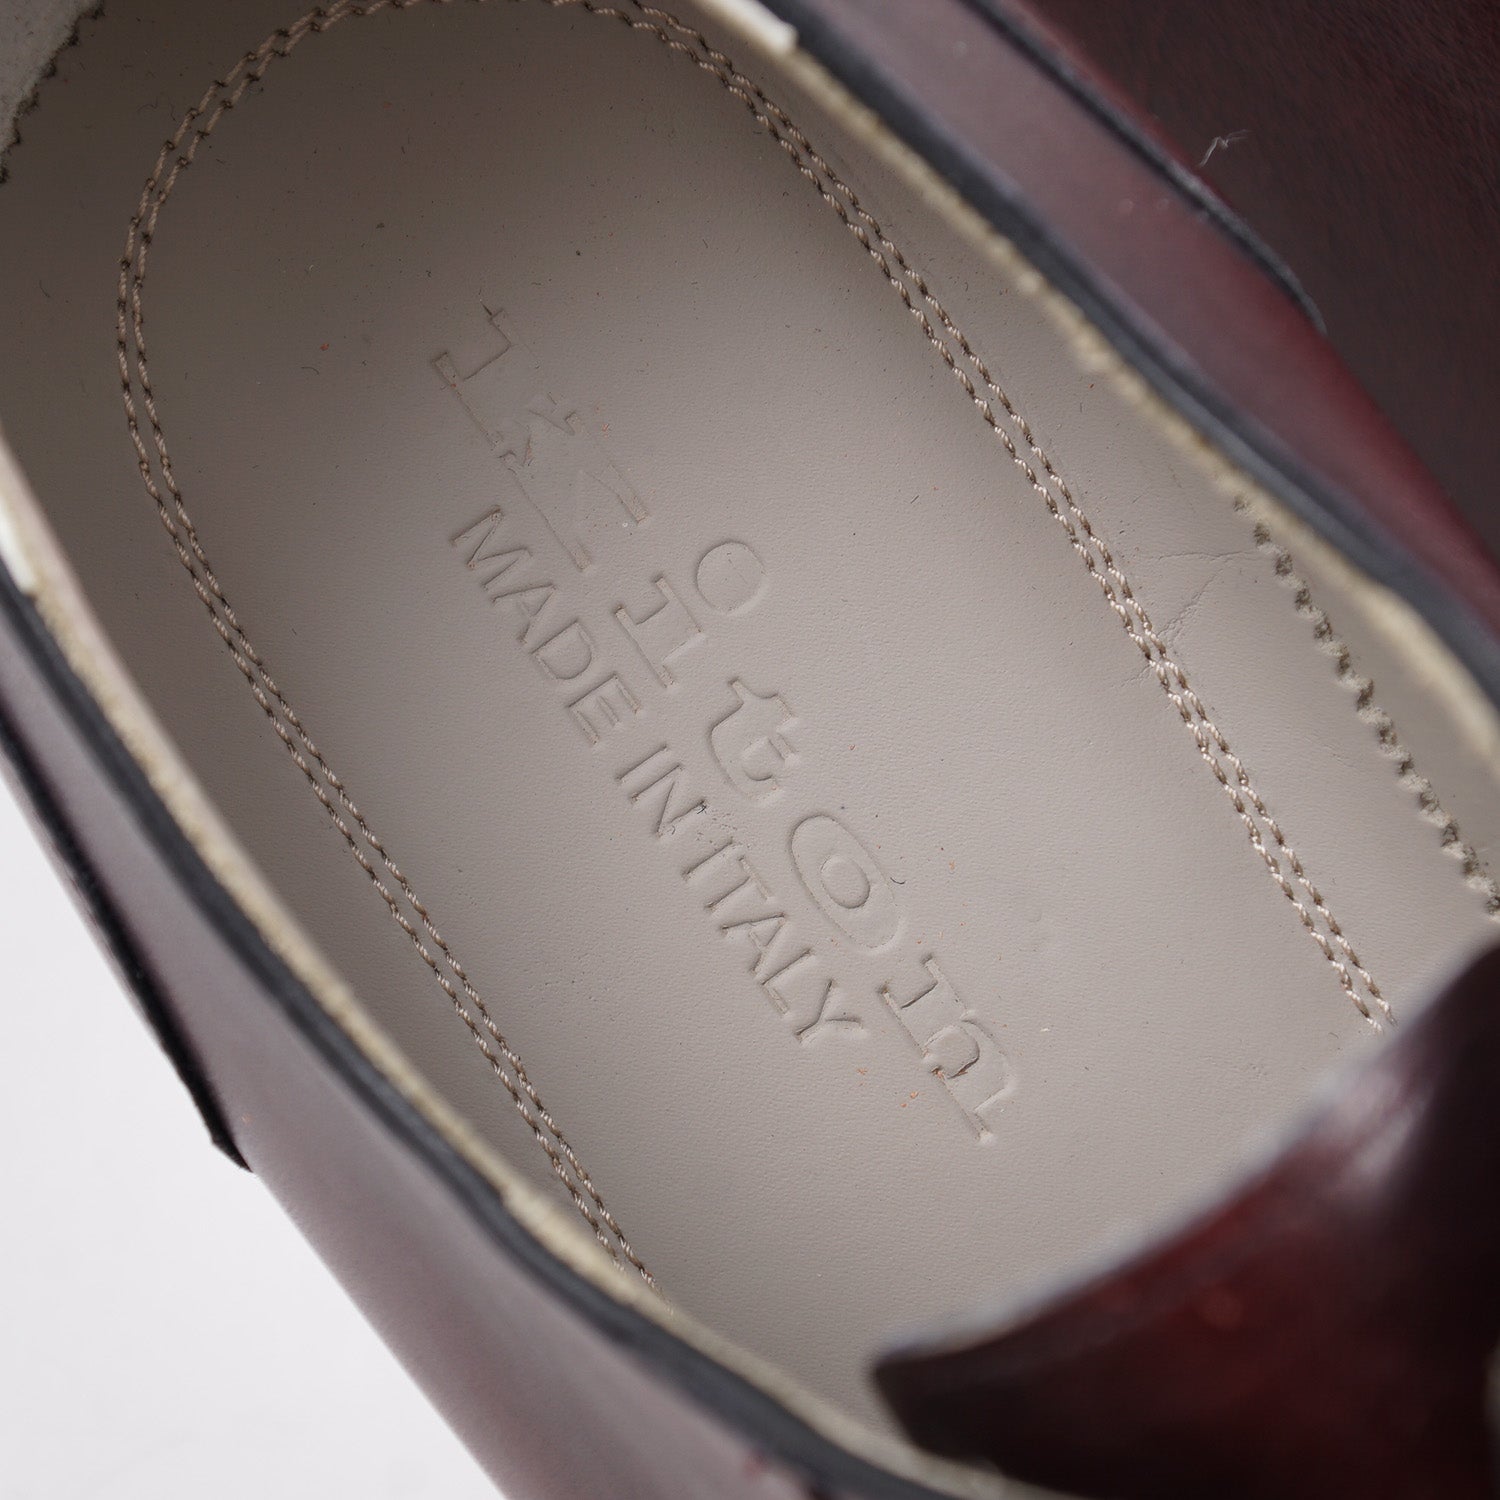 Kiton Burgundy Calf Leather Oxford - Top Shelf Apparel